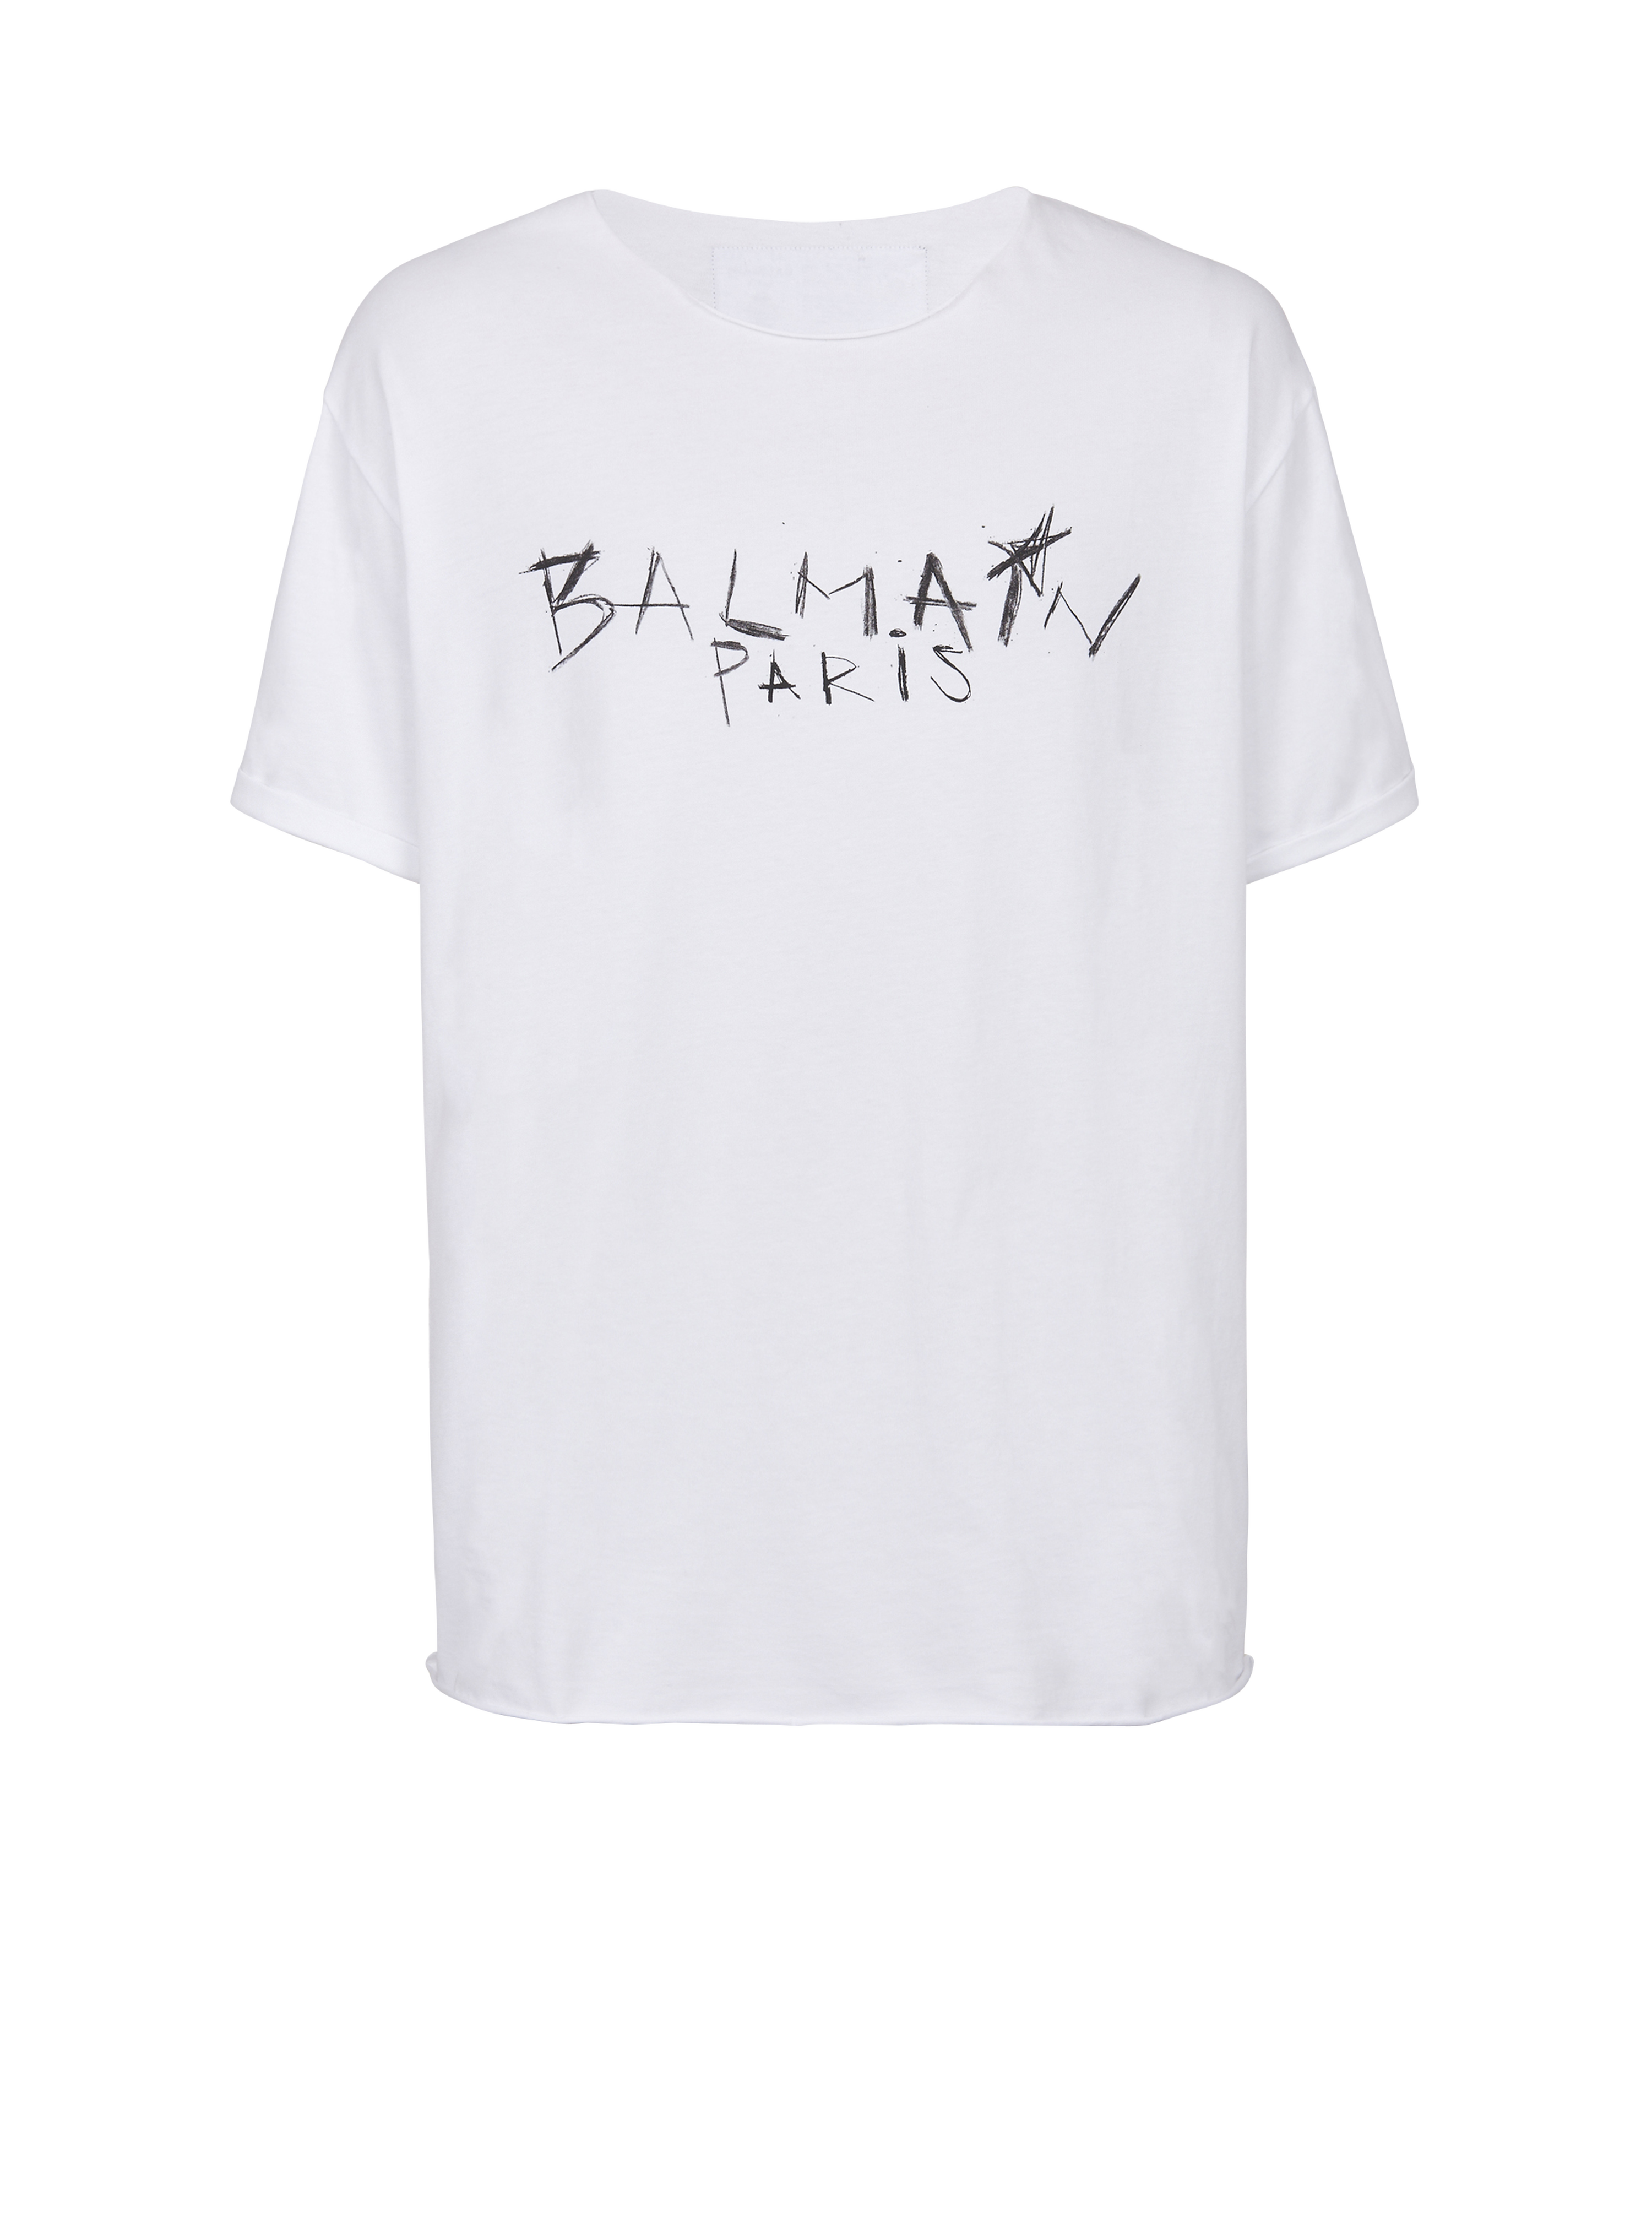 Balmain Paris 그래피티 로고 프린트 디테일 코튼 티셔츠, 흰색